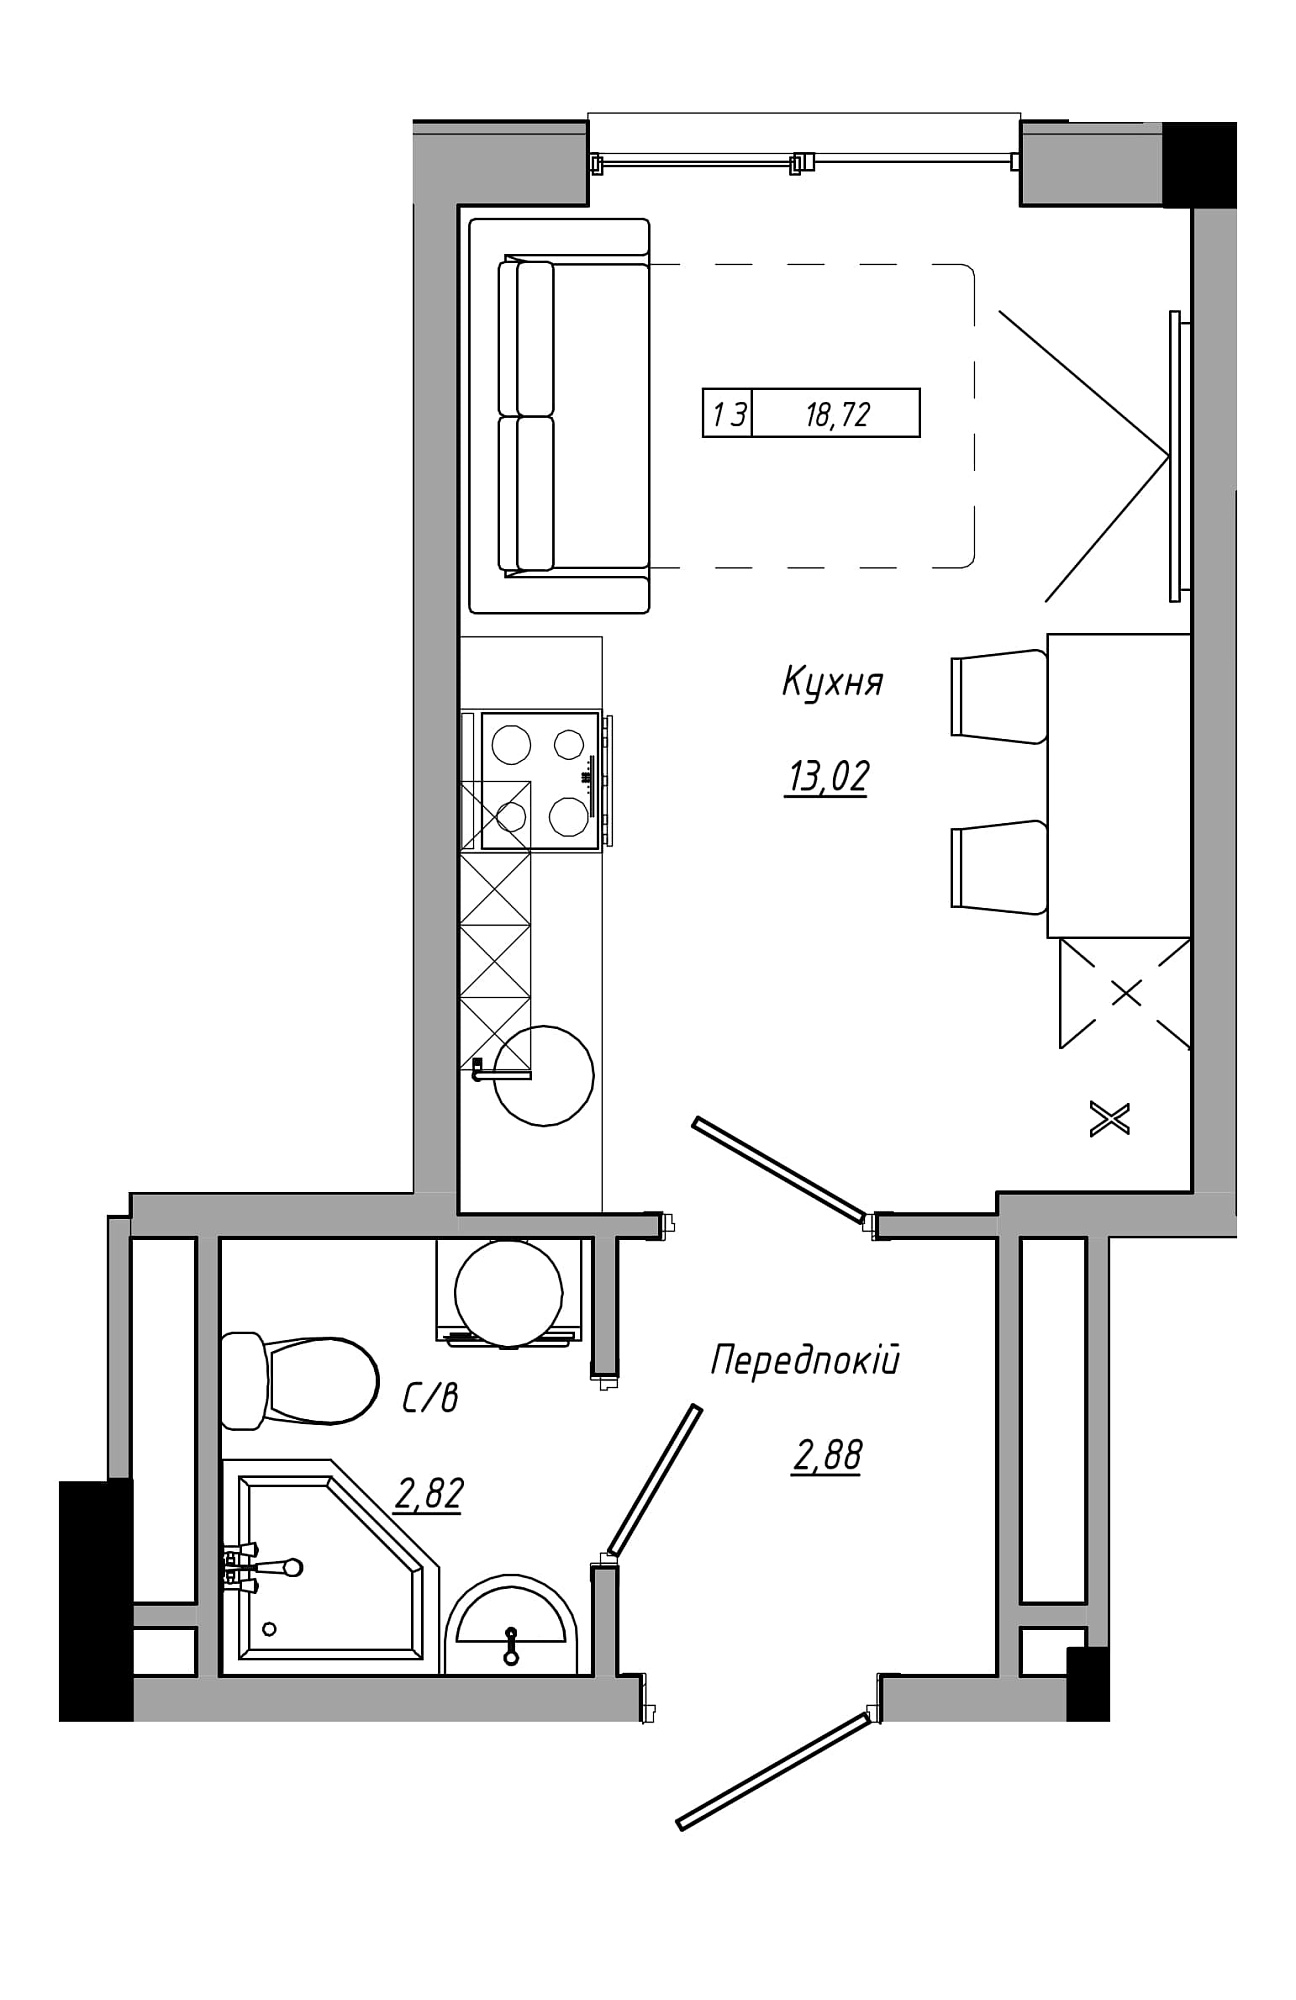 Planning Smart flats area 18.72m2, AB-21-12/00011.